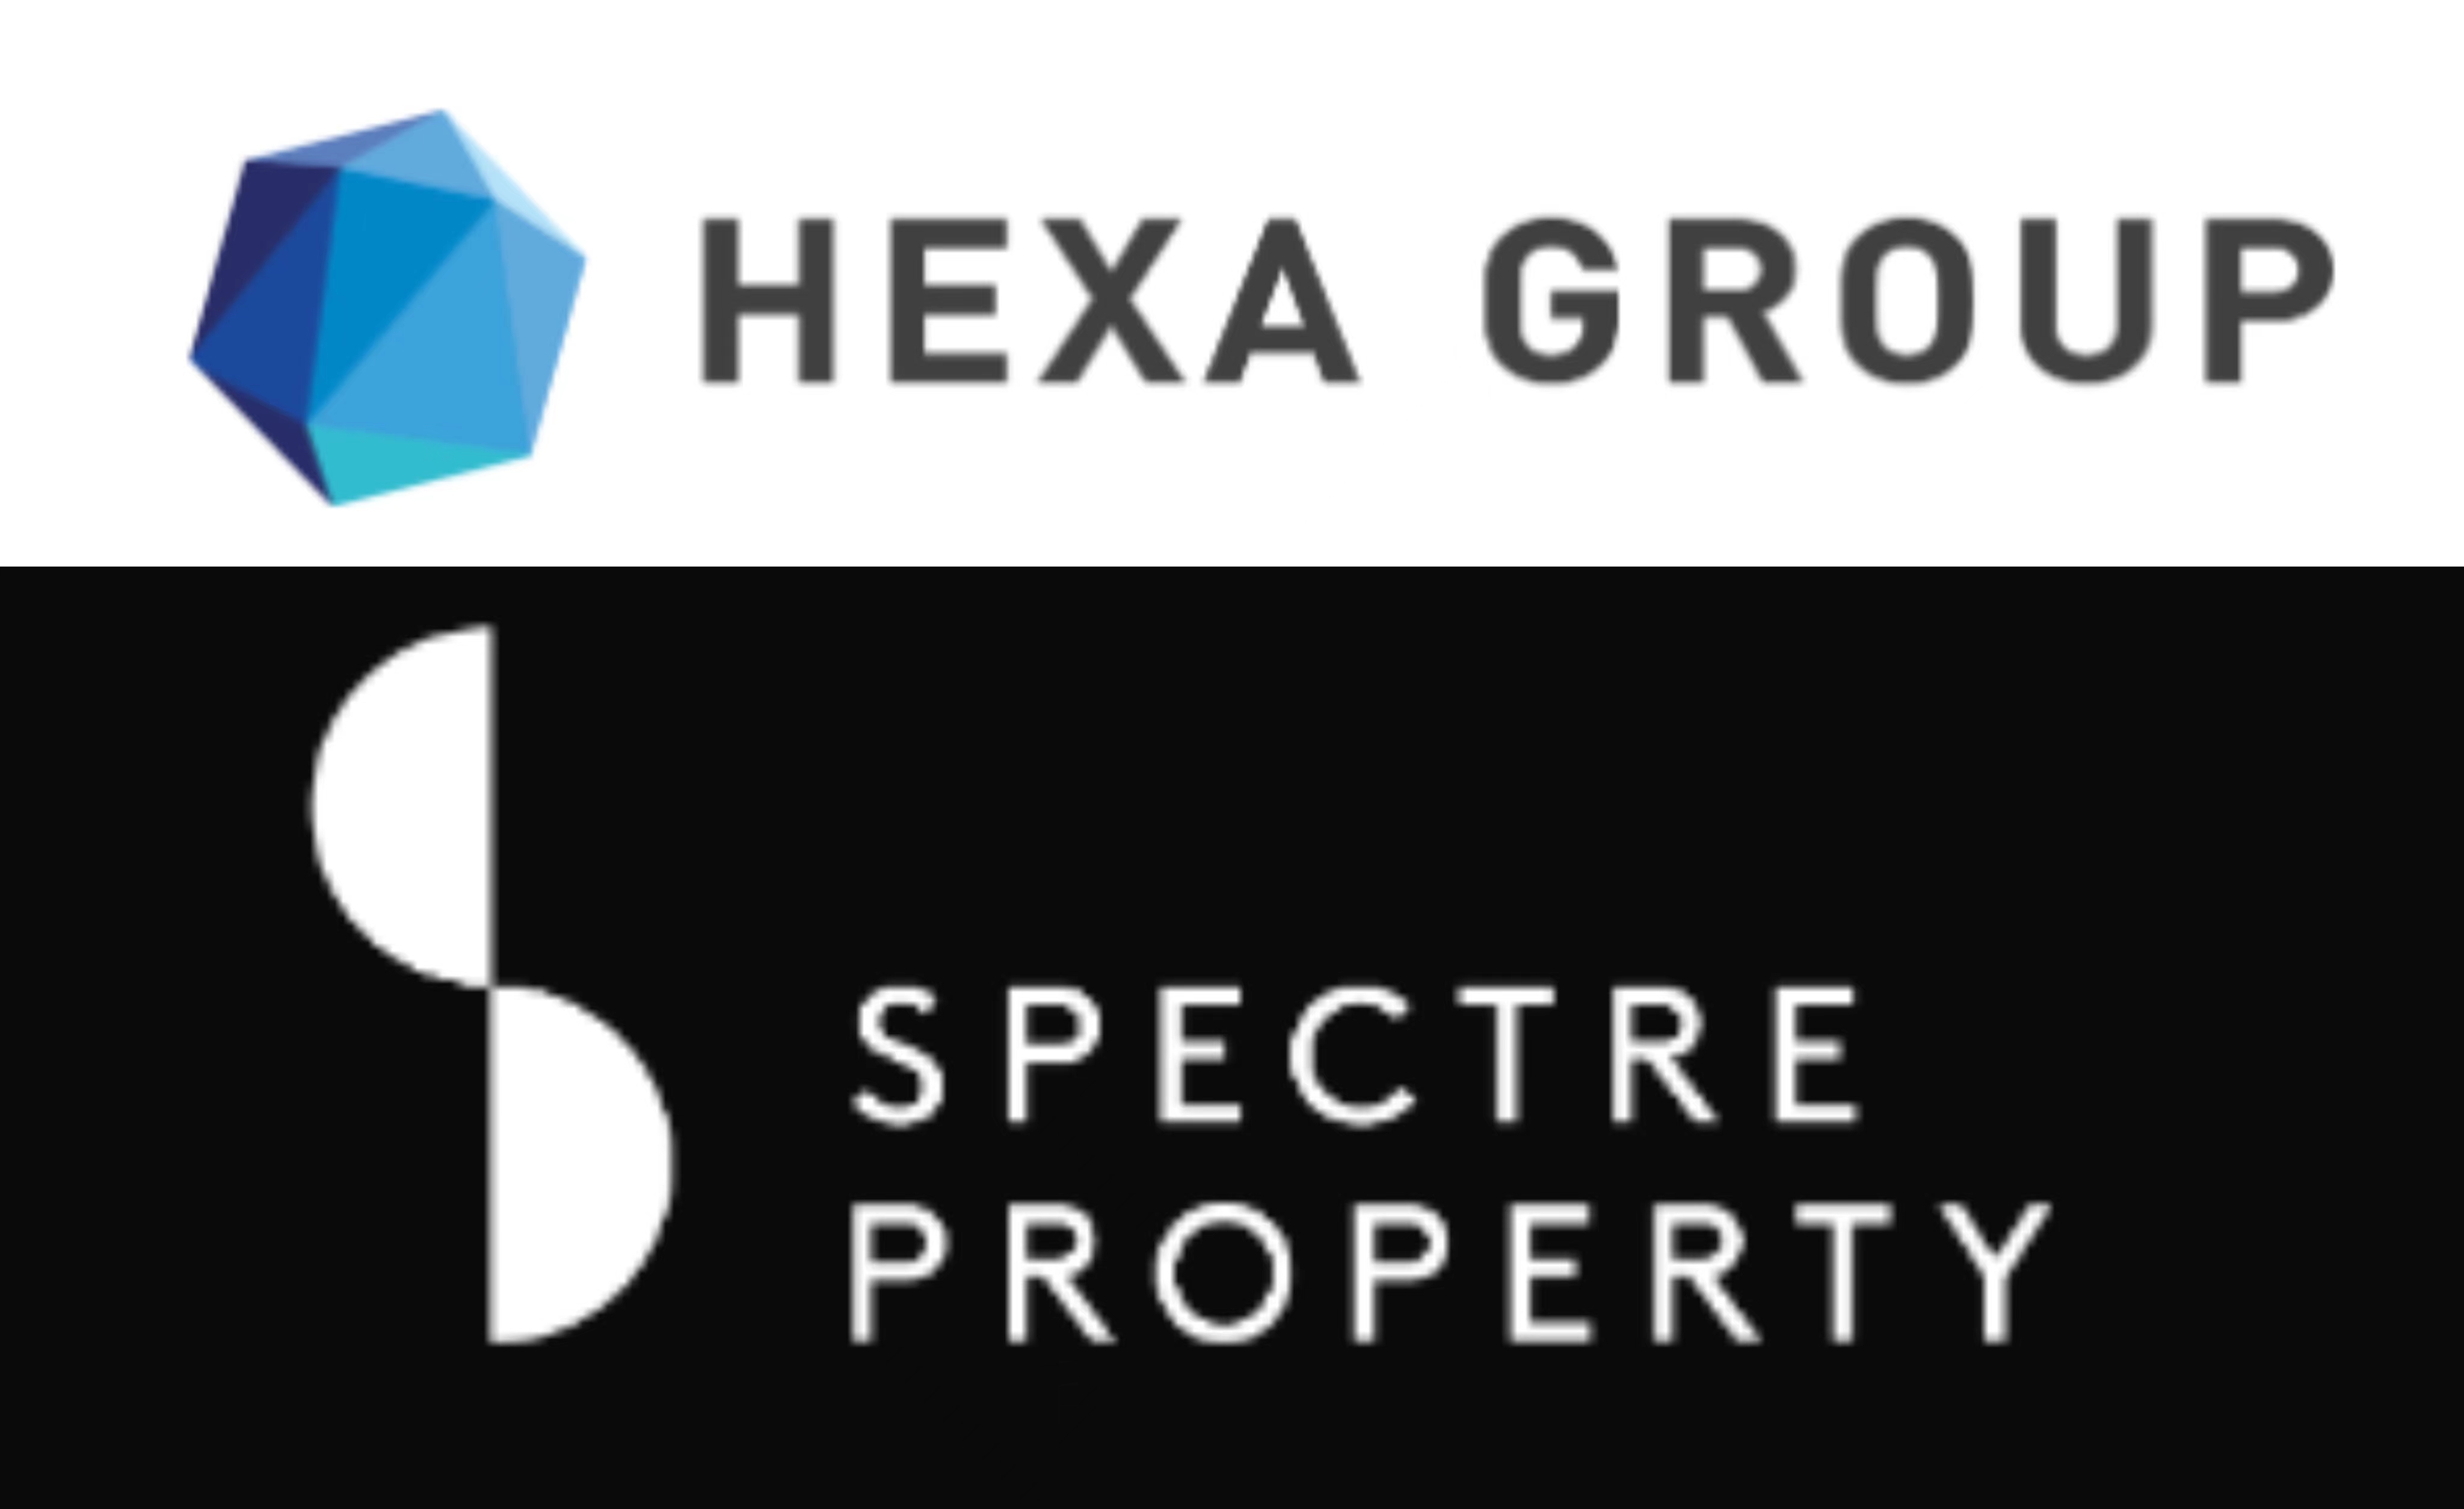  Hexa Group & Spectre Property 